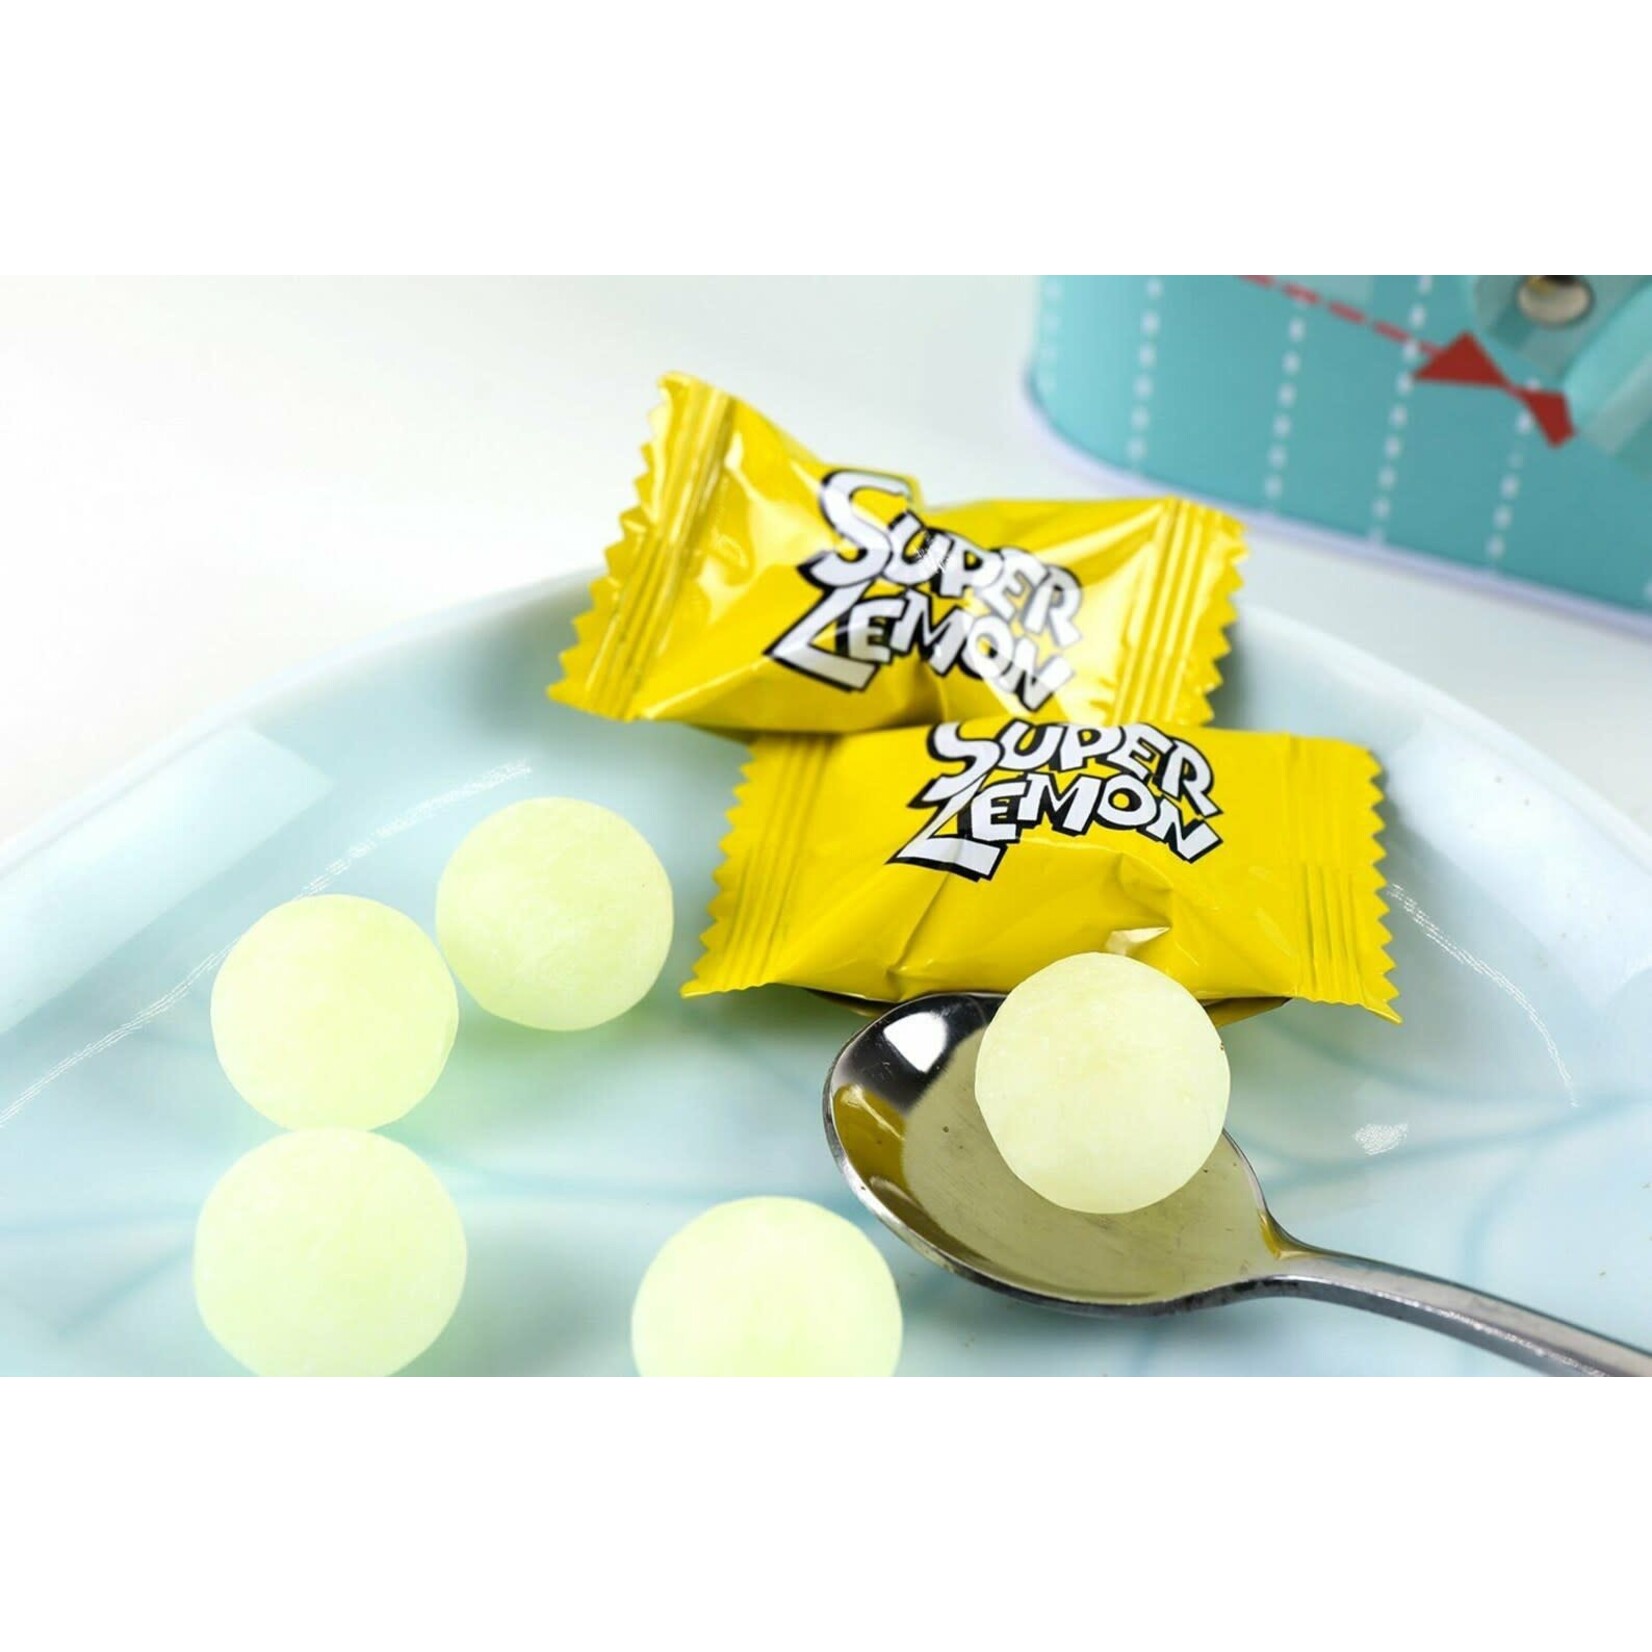 Nobel Nobel Super Lemon Candy 2.9 oz Bag